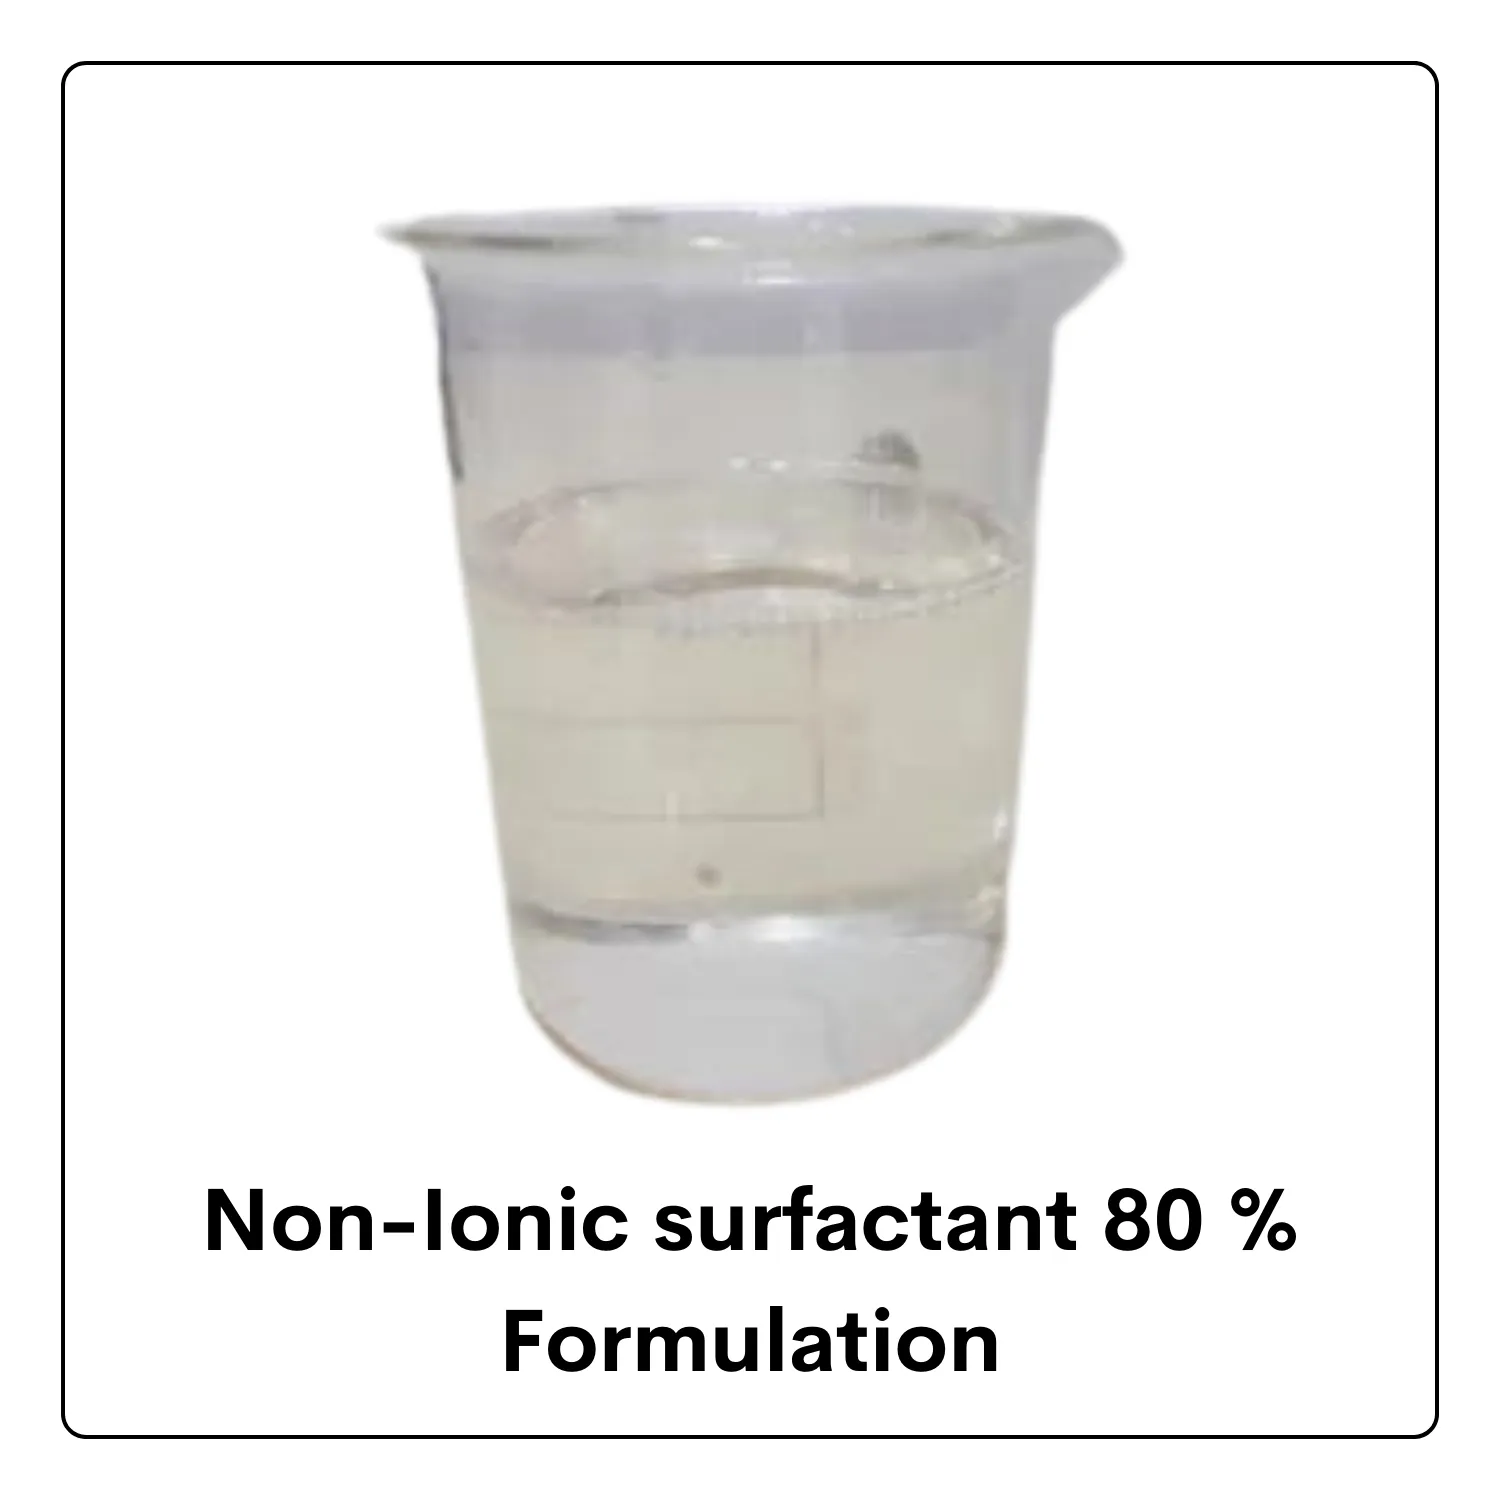 Non-Ionic surfactant 80%